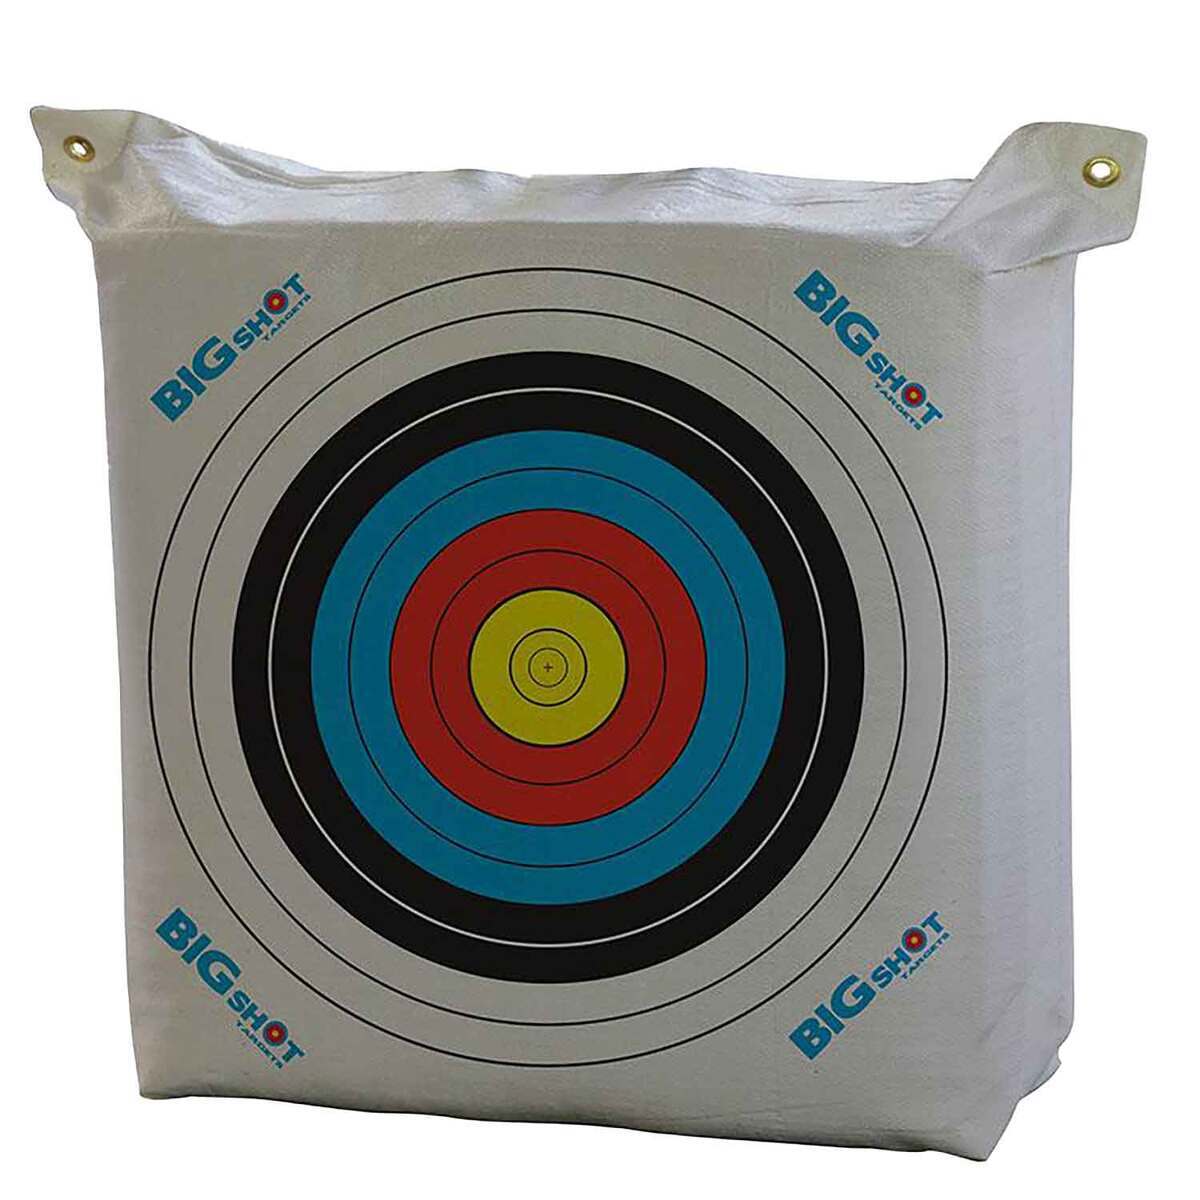 Big Shot Ballistic 450 Bag Target